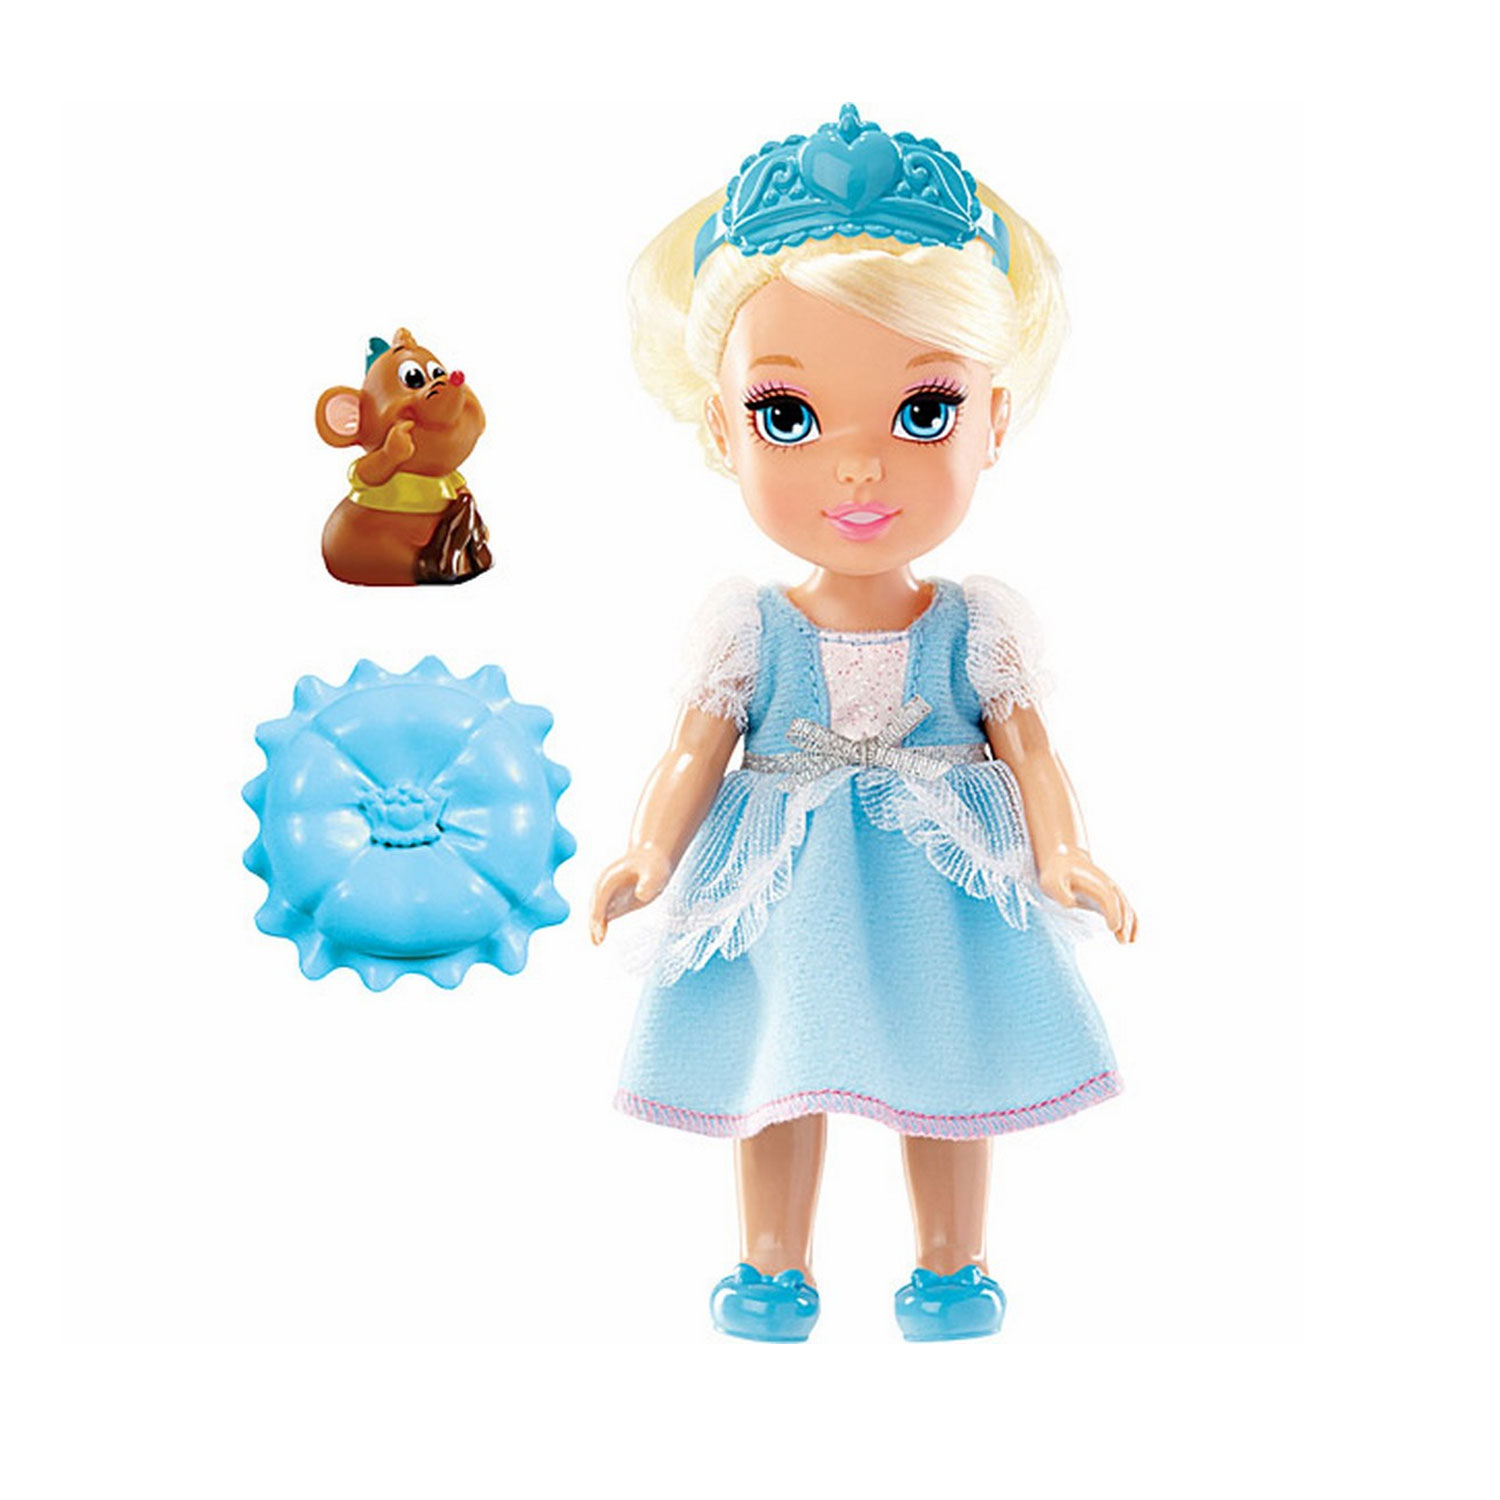 Mini poupée Princesse Disney : Cendrillon